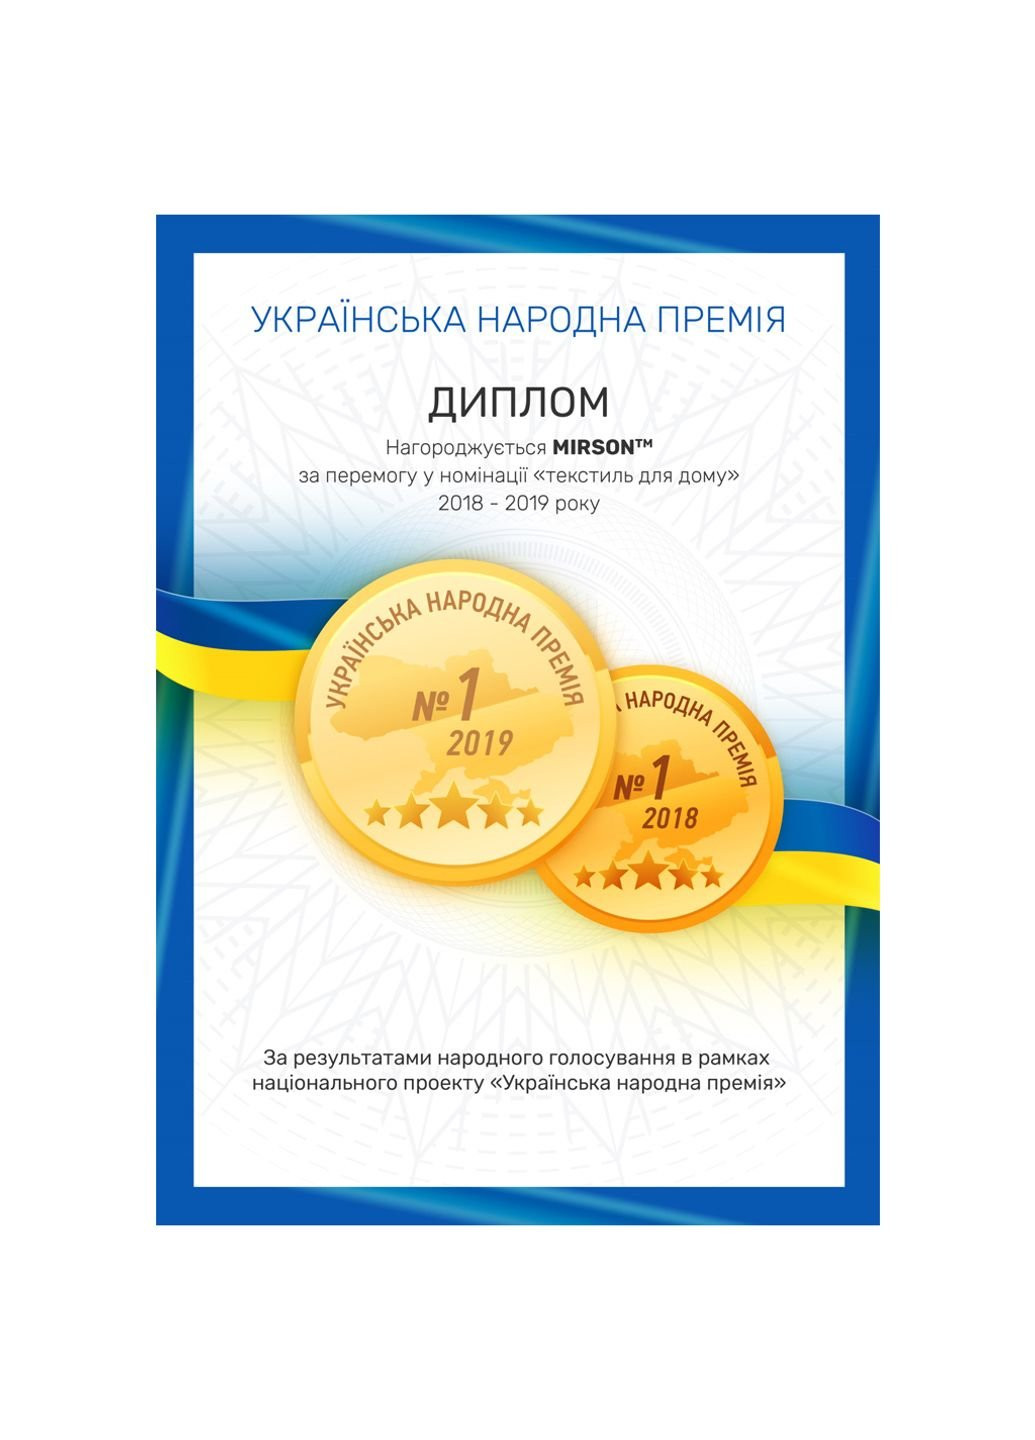 Mirson полотенце банное №5000 softness bordo 100x150 см (2200003181180) красный производство - Украина